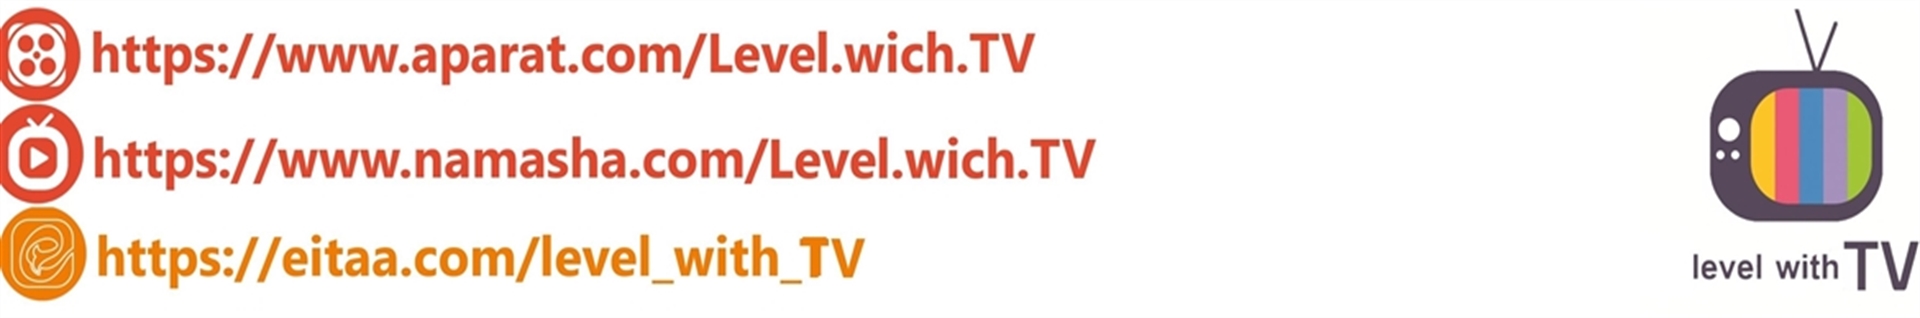 level wich TV